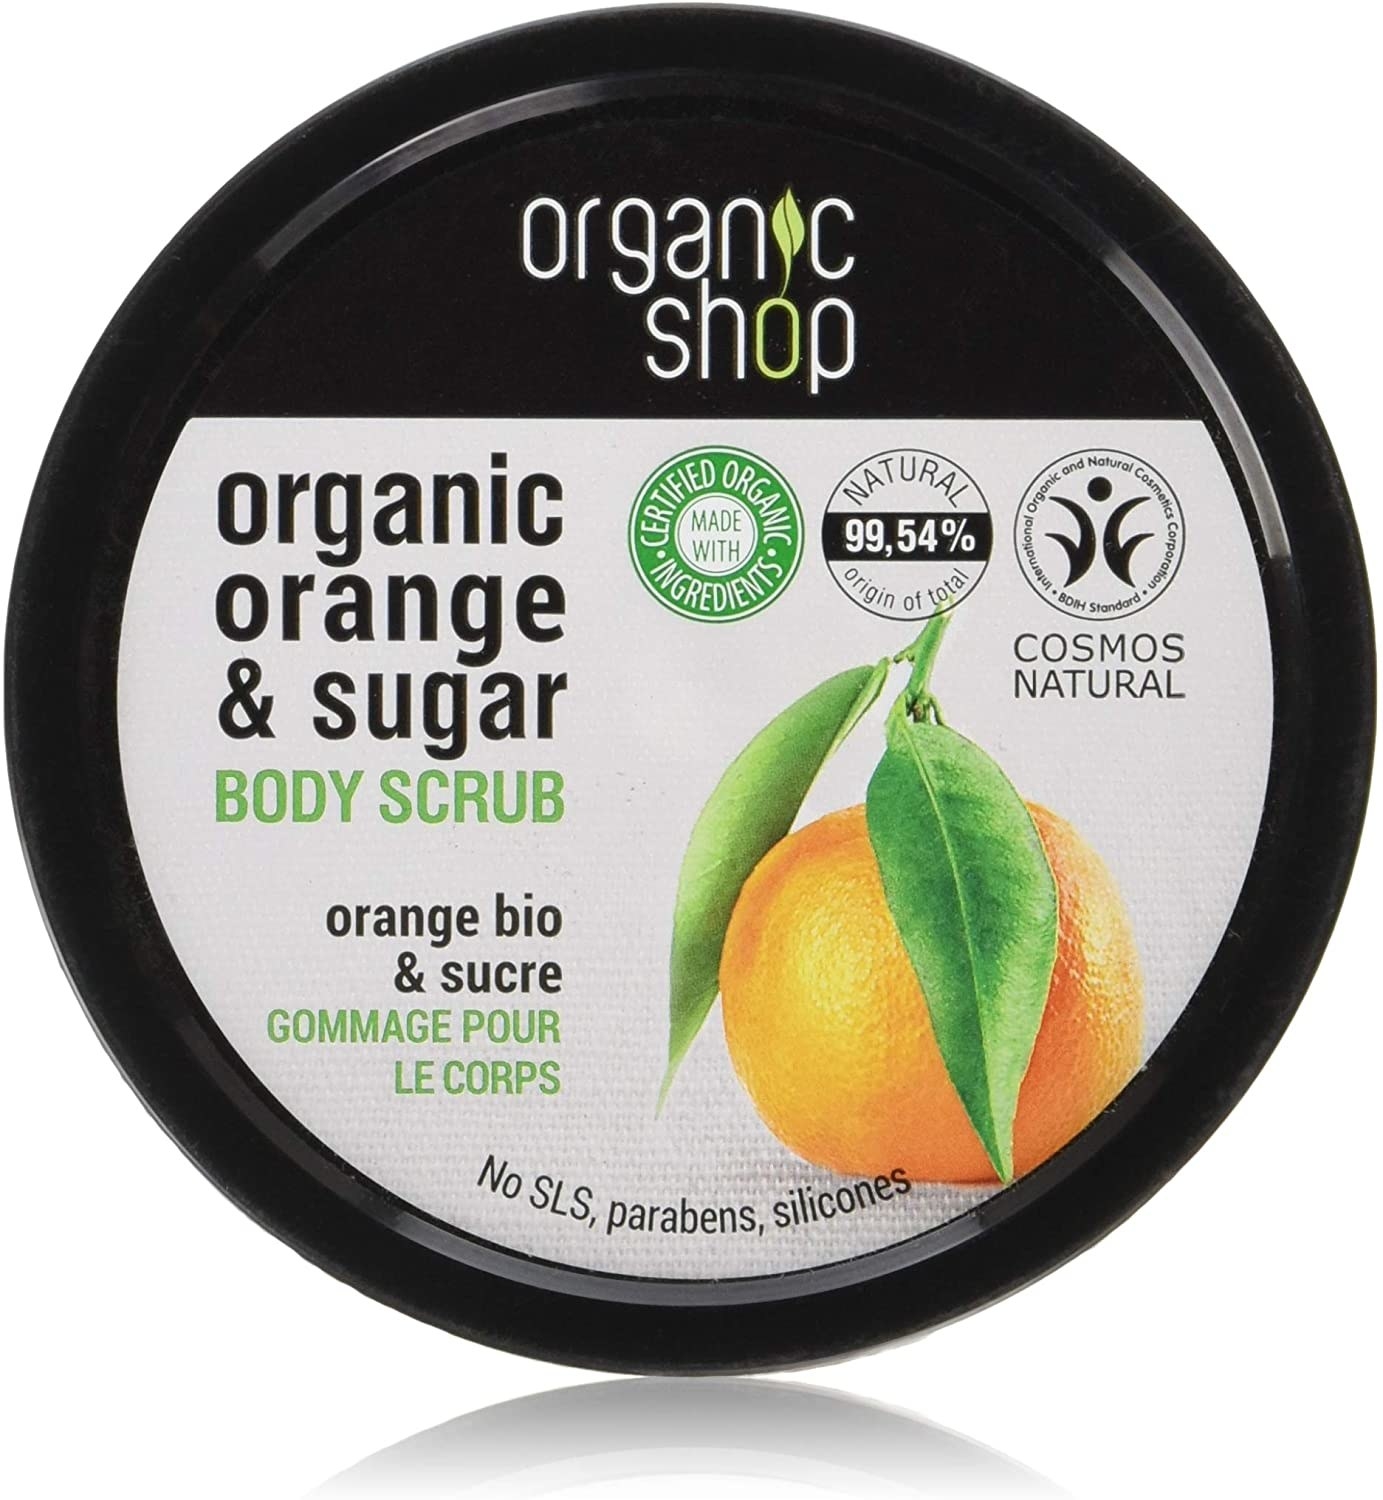 Органик шоп. Organic shop пилинг. Органик шоп дыня пилинг. Оранжевый Органик шоп. Органик шоп пилинг для лица.